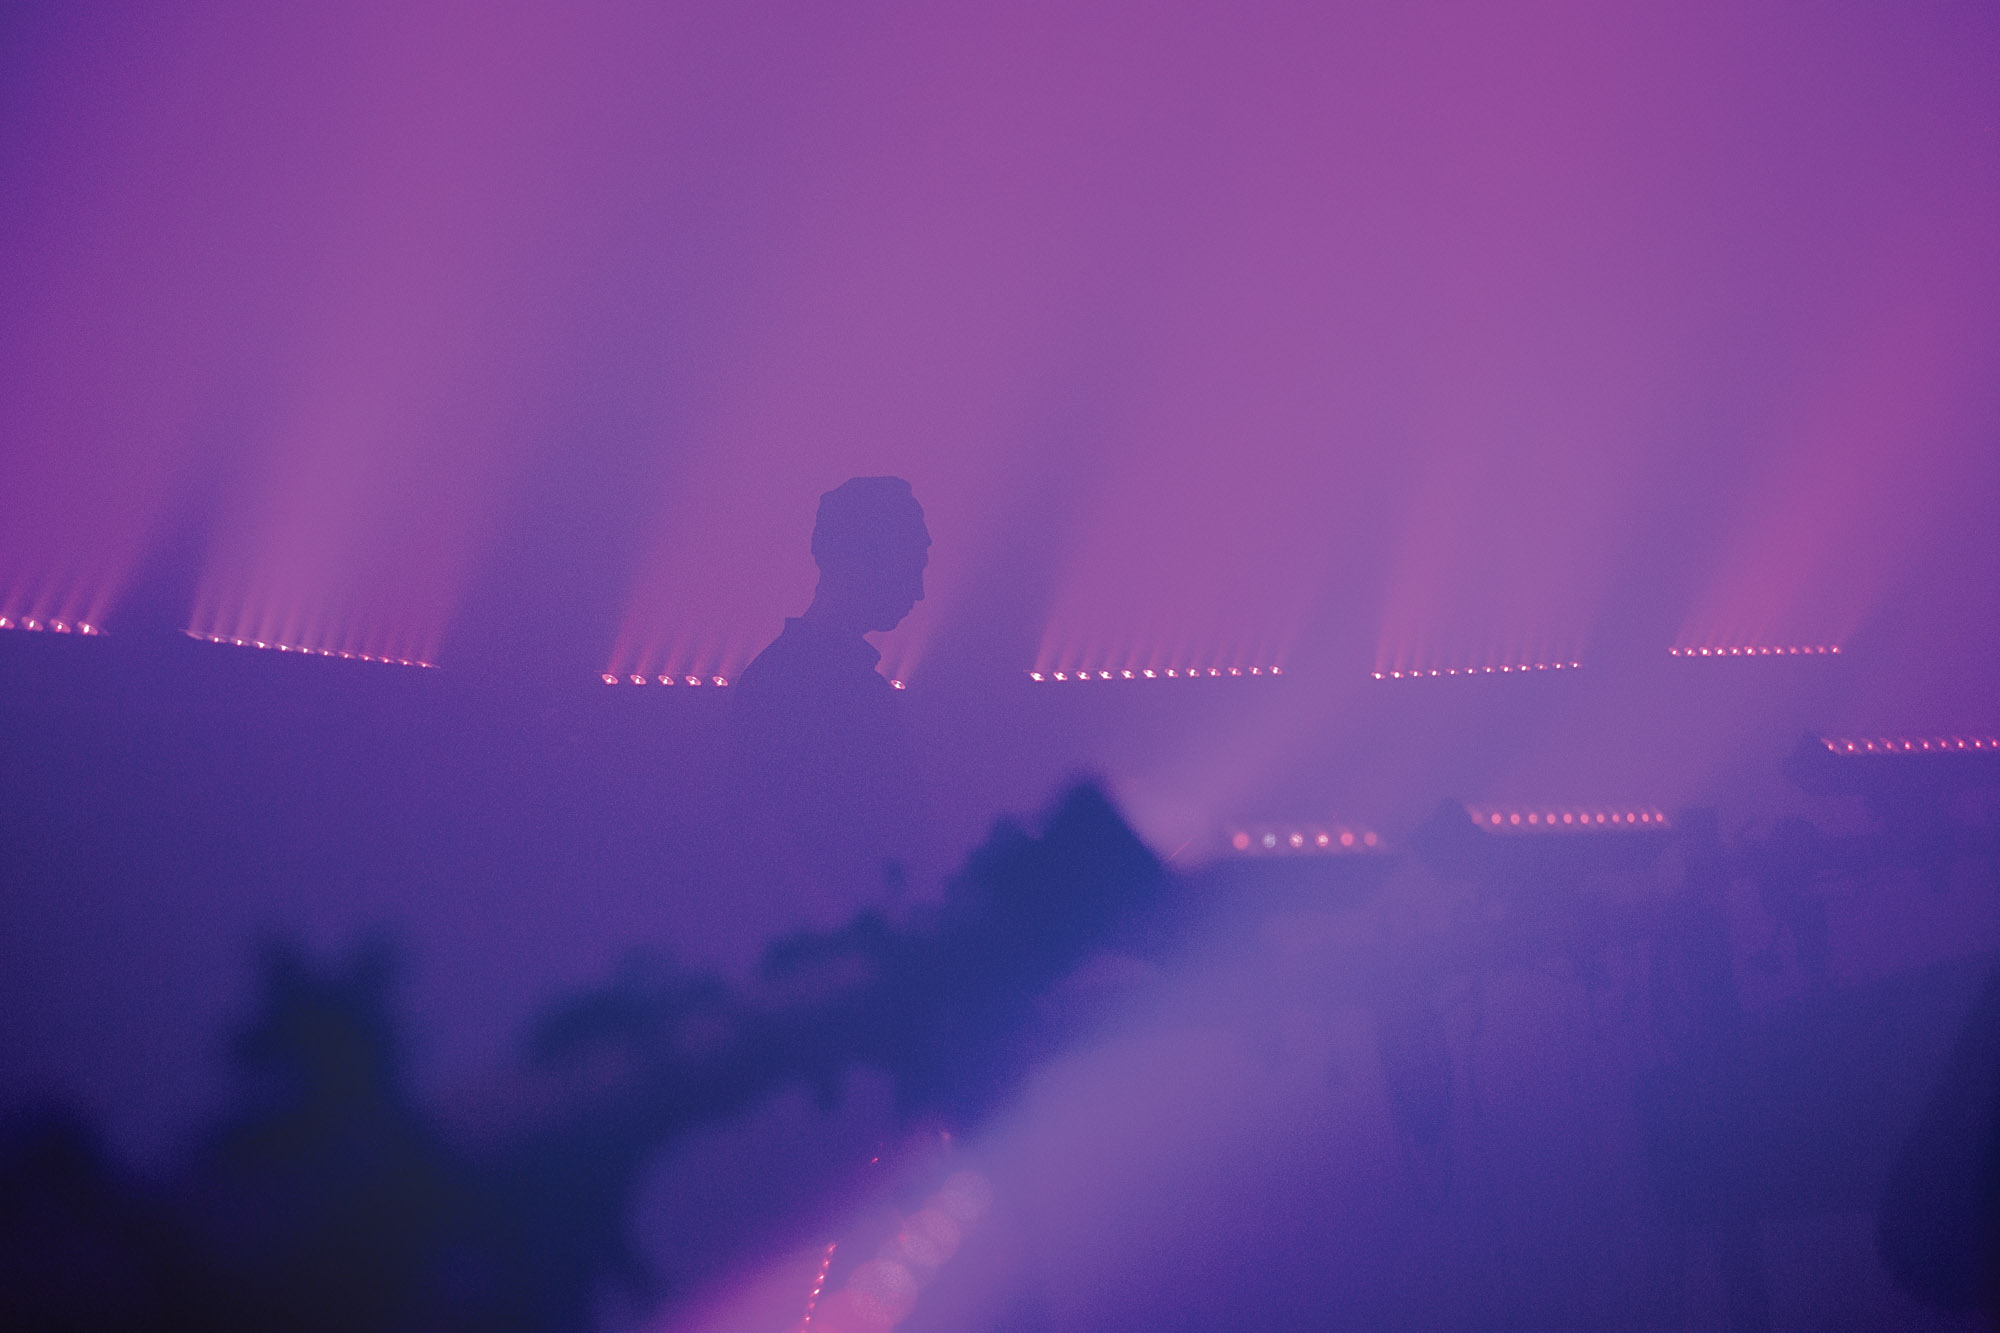 tim hecker's silhouette in dense purple theatrical fog 